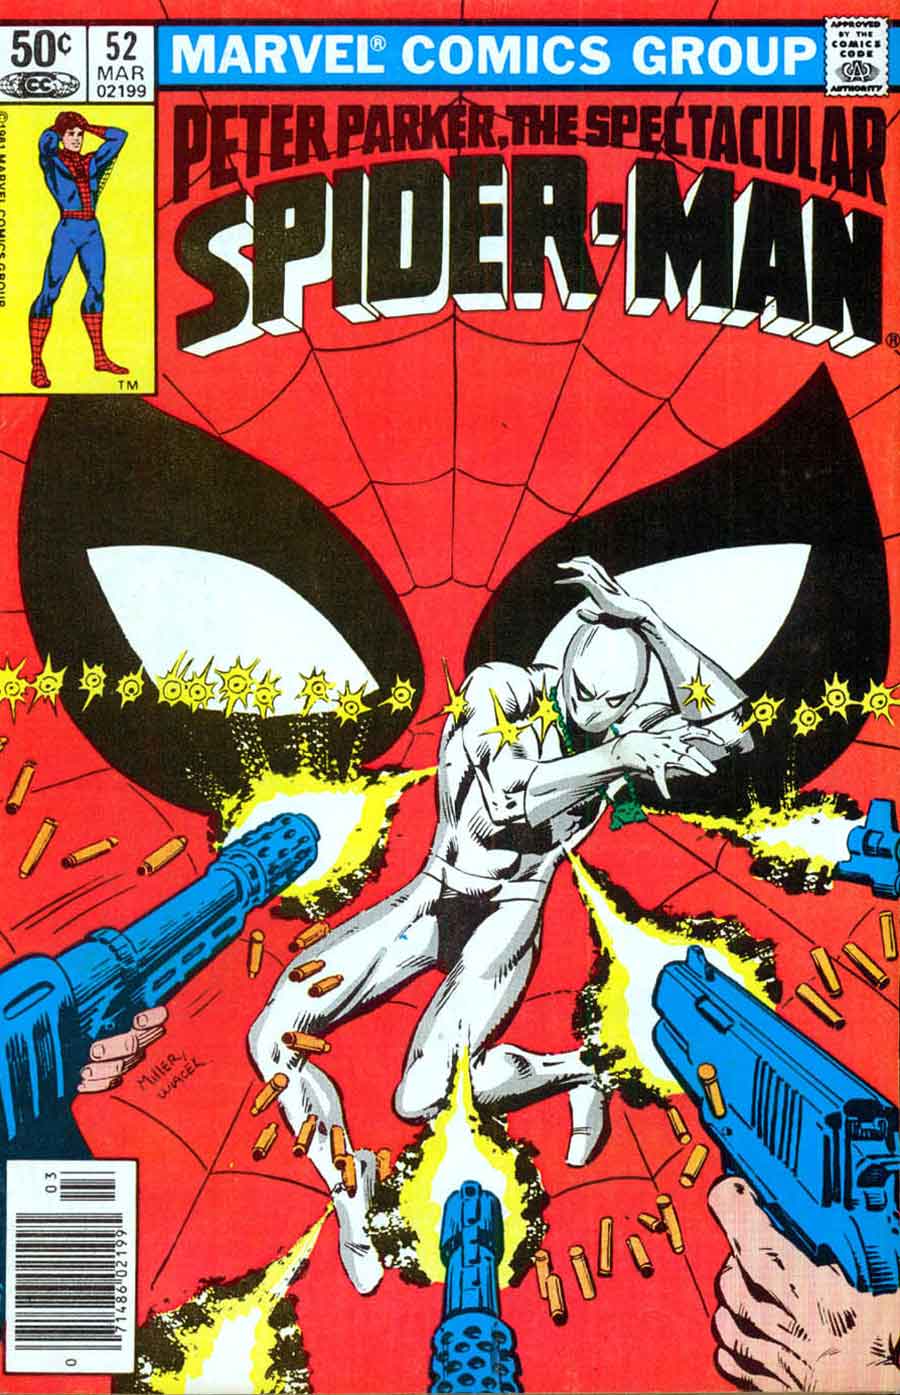 Spectacular Spider-man v2 #52 marvel 1980s comic book cover art by Frank Miller